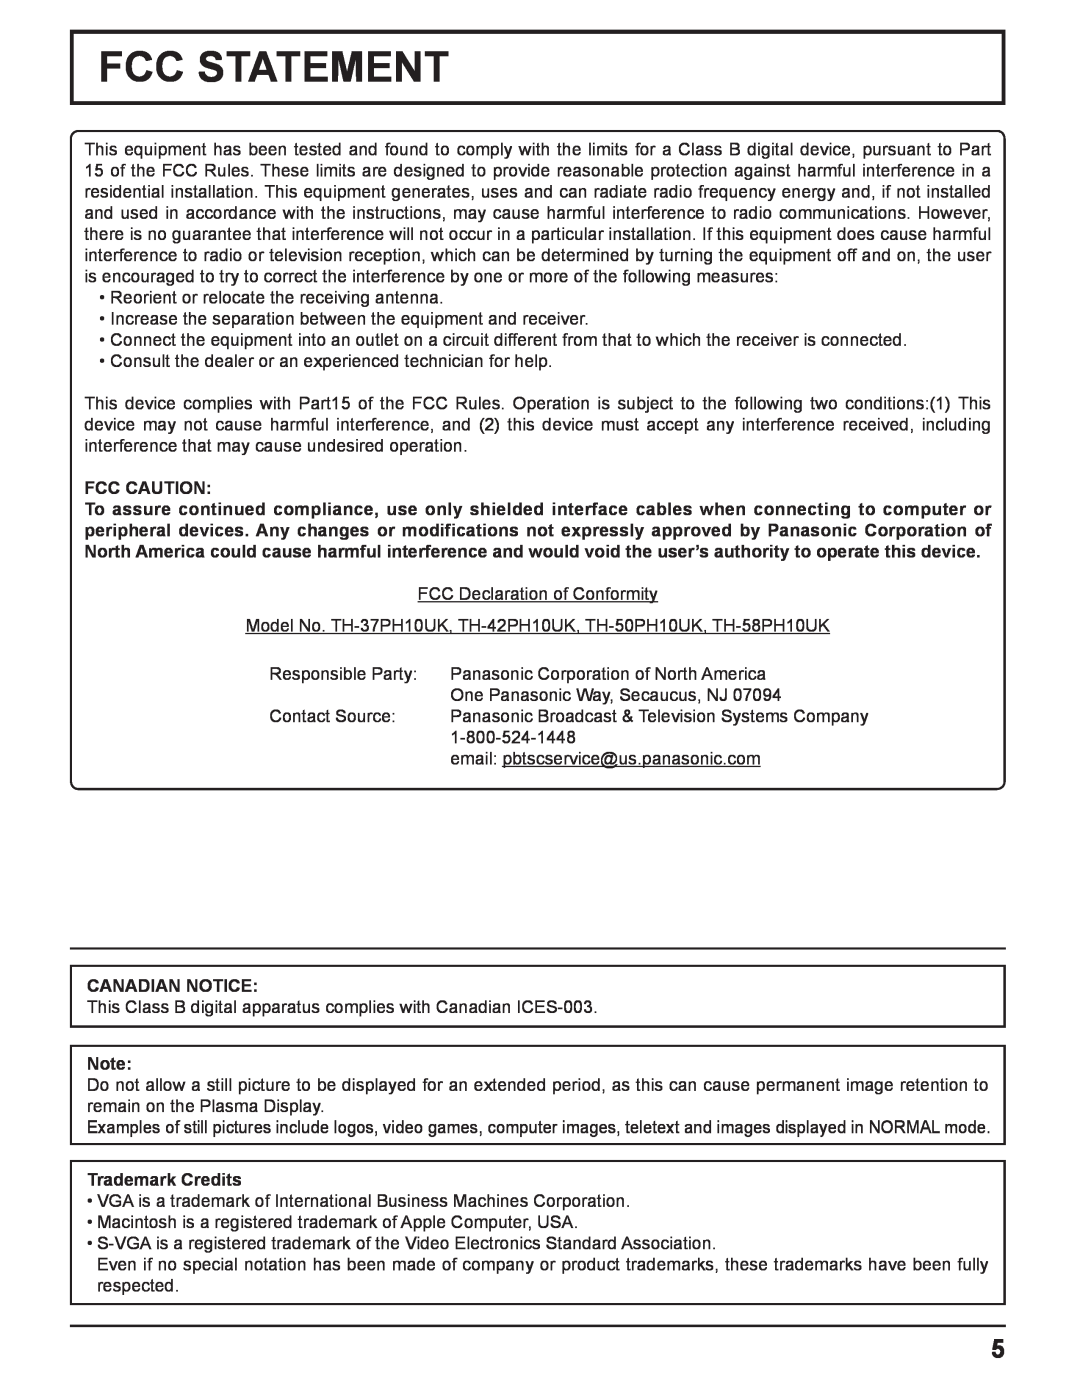 Panasonic TH-37PH10UK manual Fcc Statement, Fcc Caution, Canadian Notice, Trademark Credits 